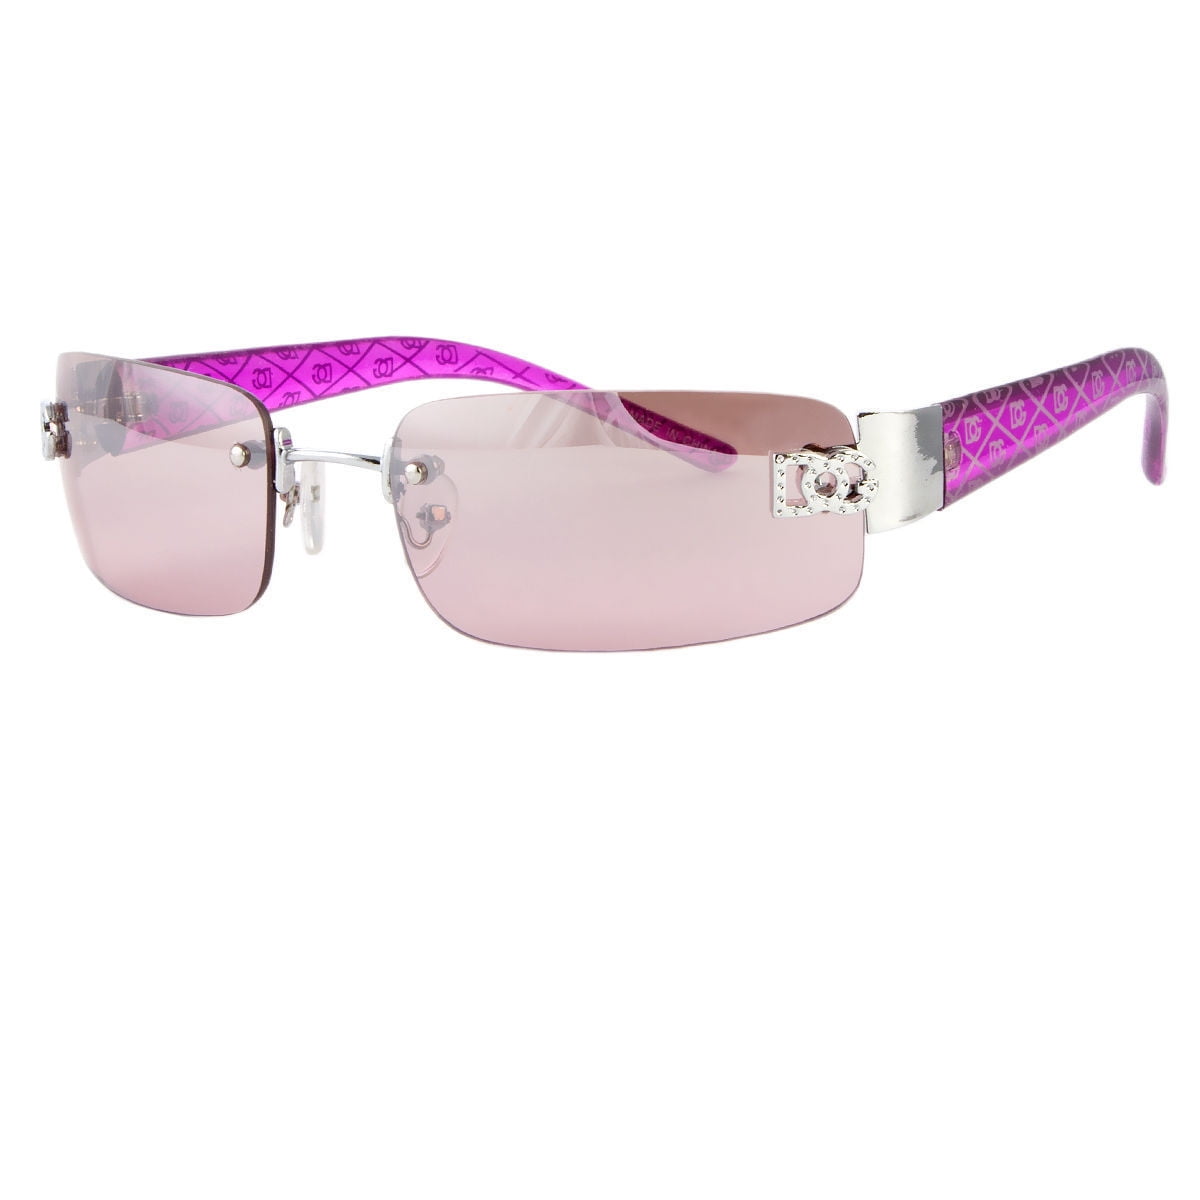 New DG Small Rimless Womens Sunglasses Shades Pink Designer Fashion Wrap Around 